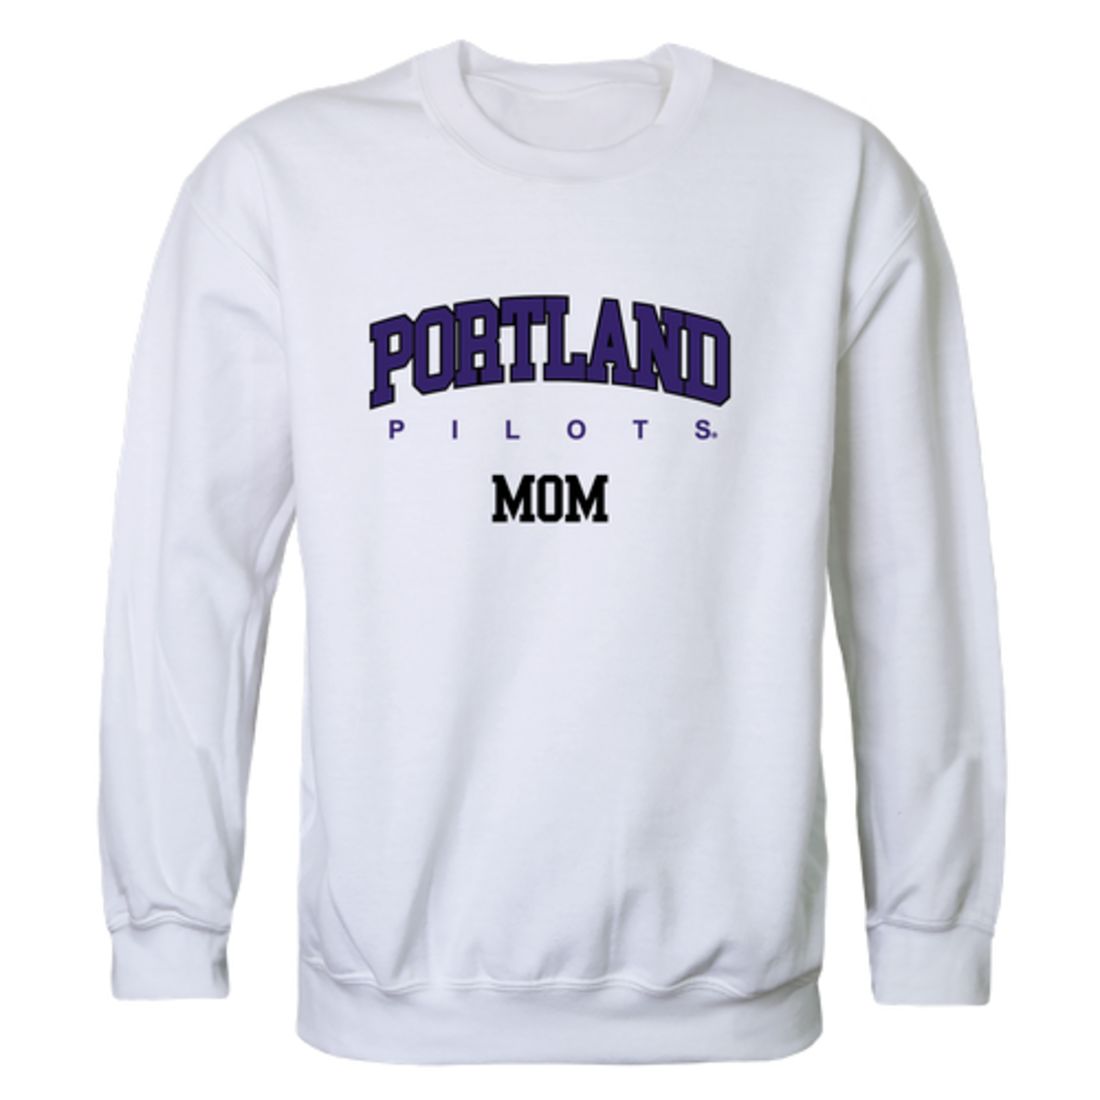 UP University of Portland Pilots Mom Fleece Crewneck Pullover Sweatshirt Heather Charcoal Small-Campus-Wardrobe